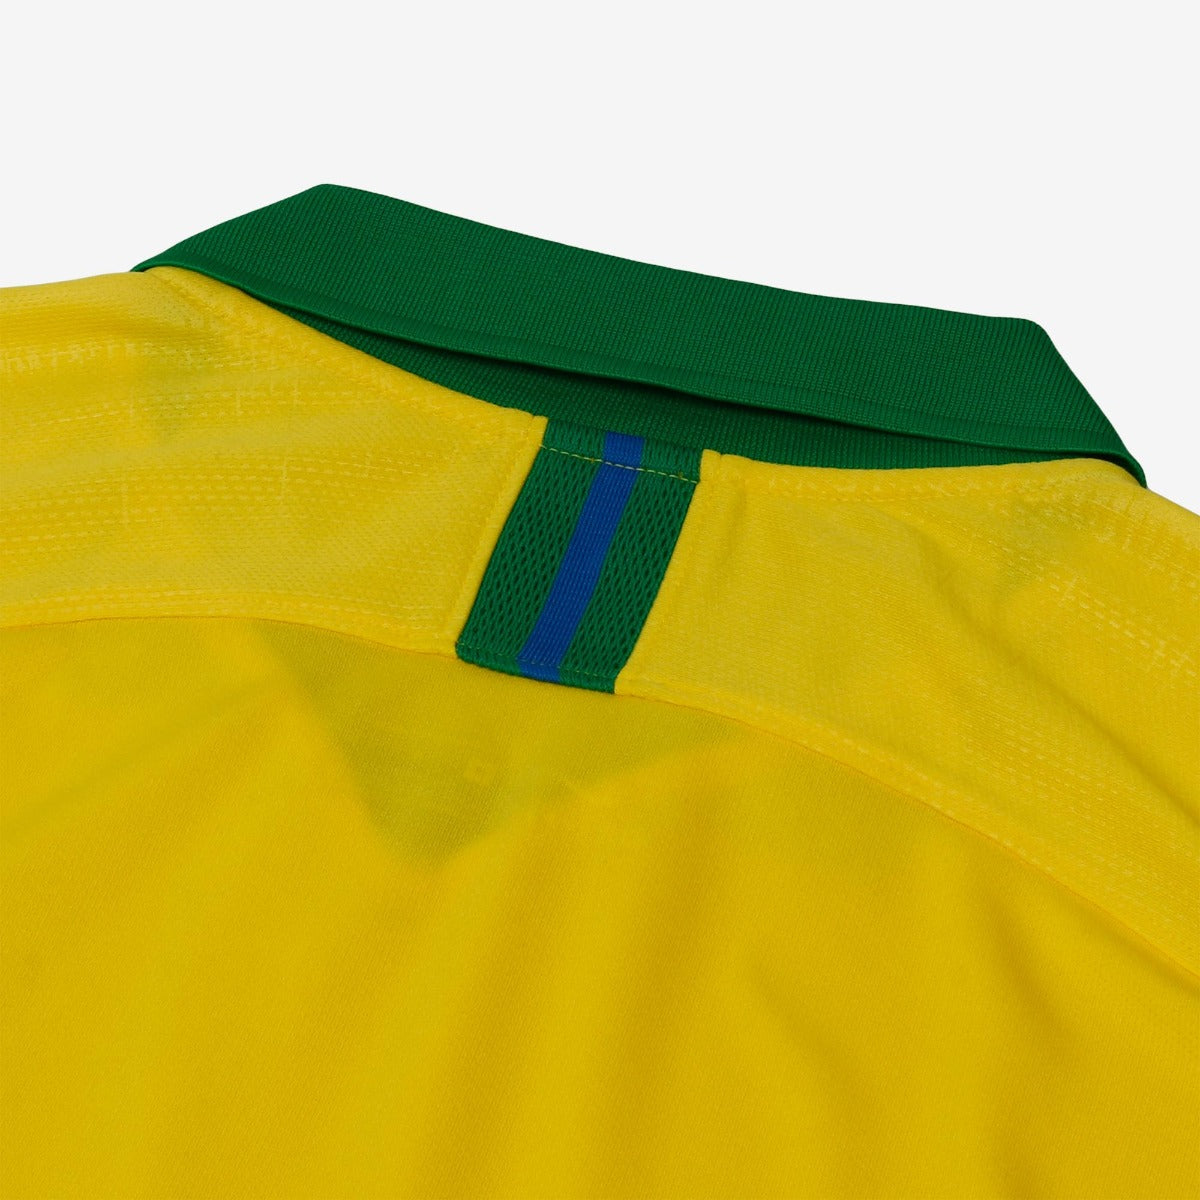 Nike Brazil 2019-20 Copa America Home Jersey - Yellow